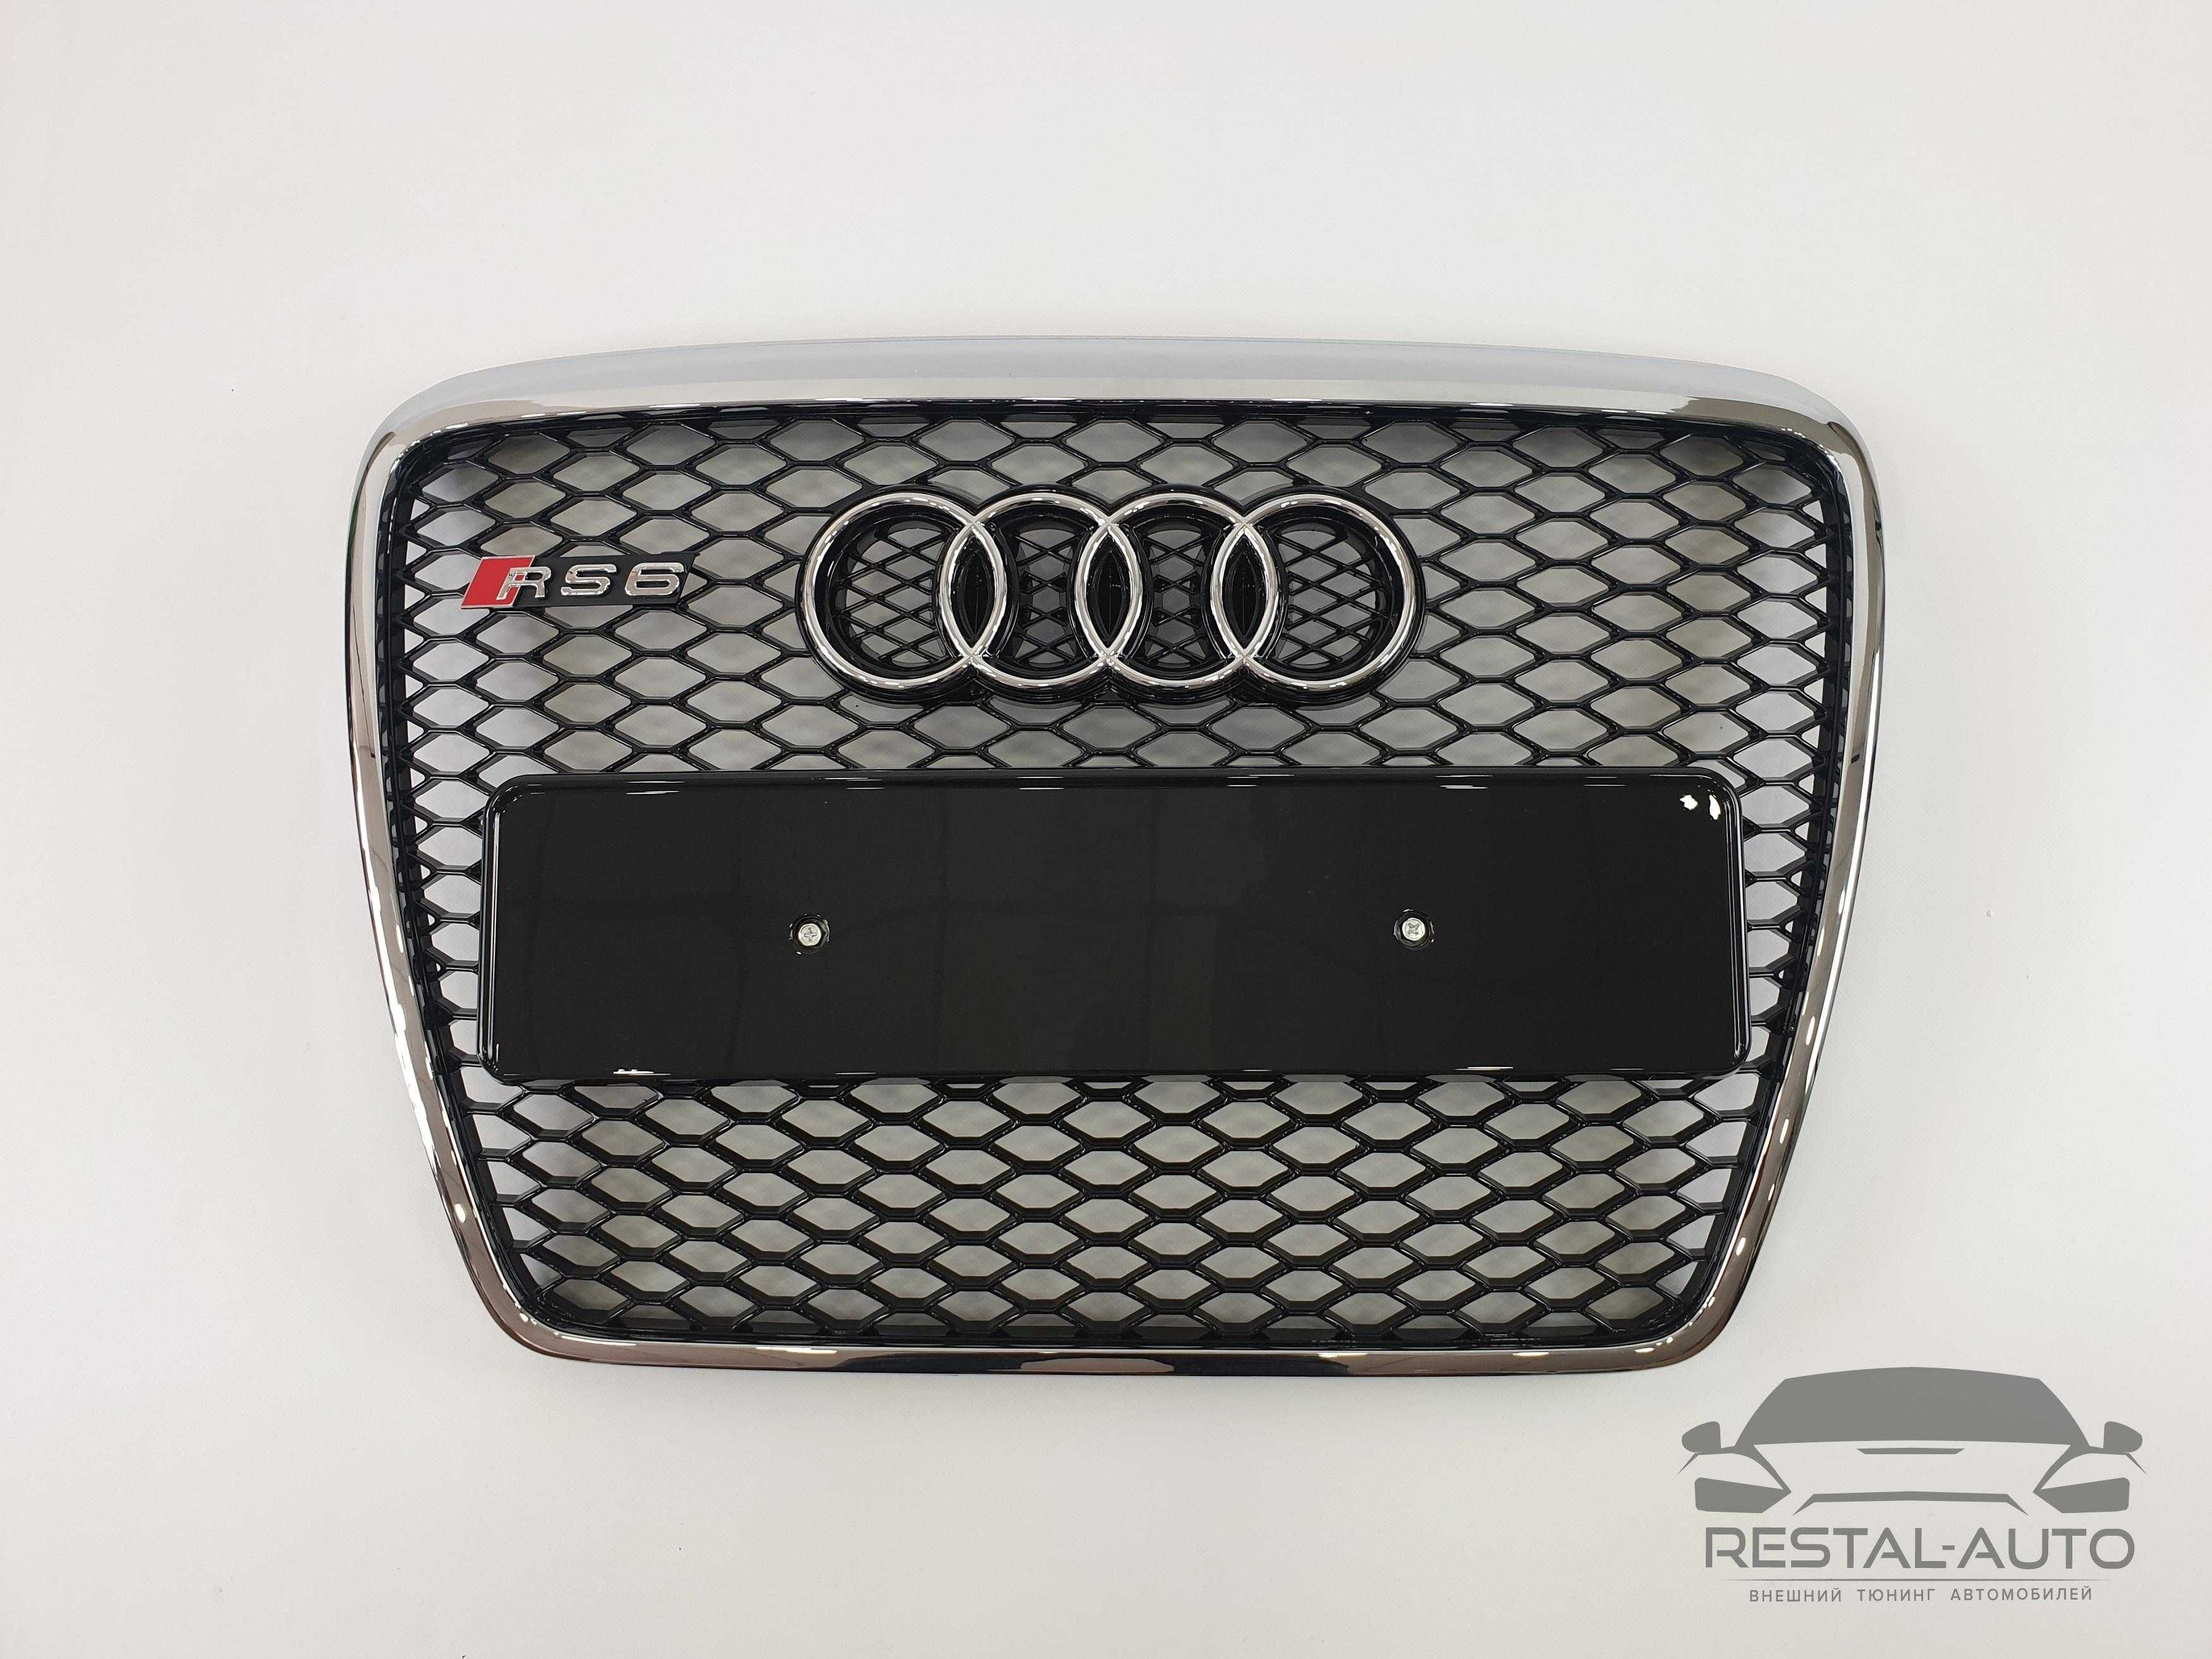 Решетка радиатора Audi A6 2004-2011 г в стиле RS